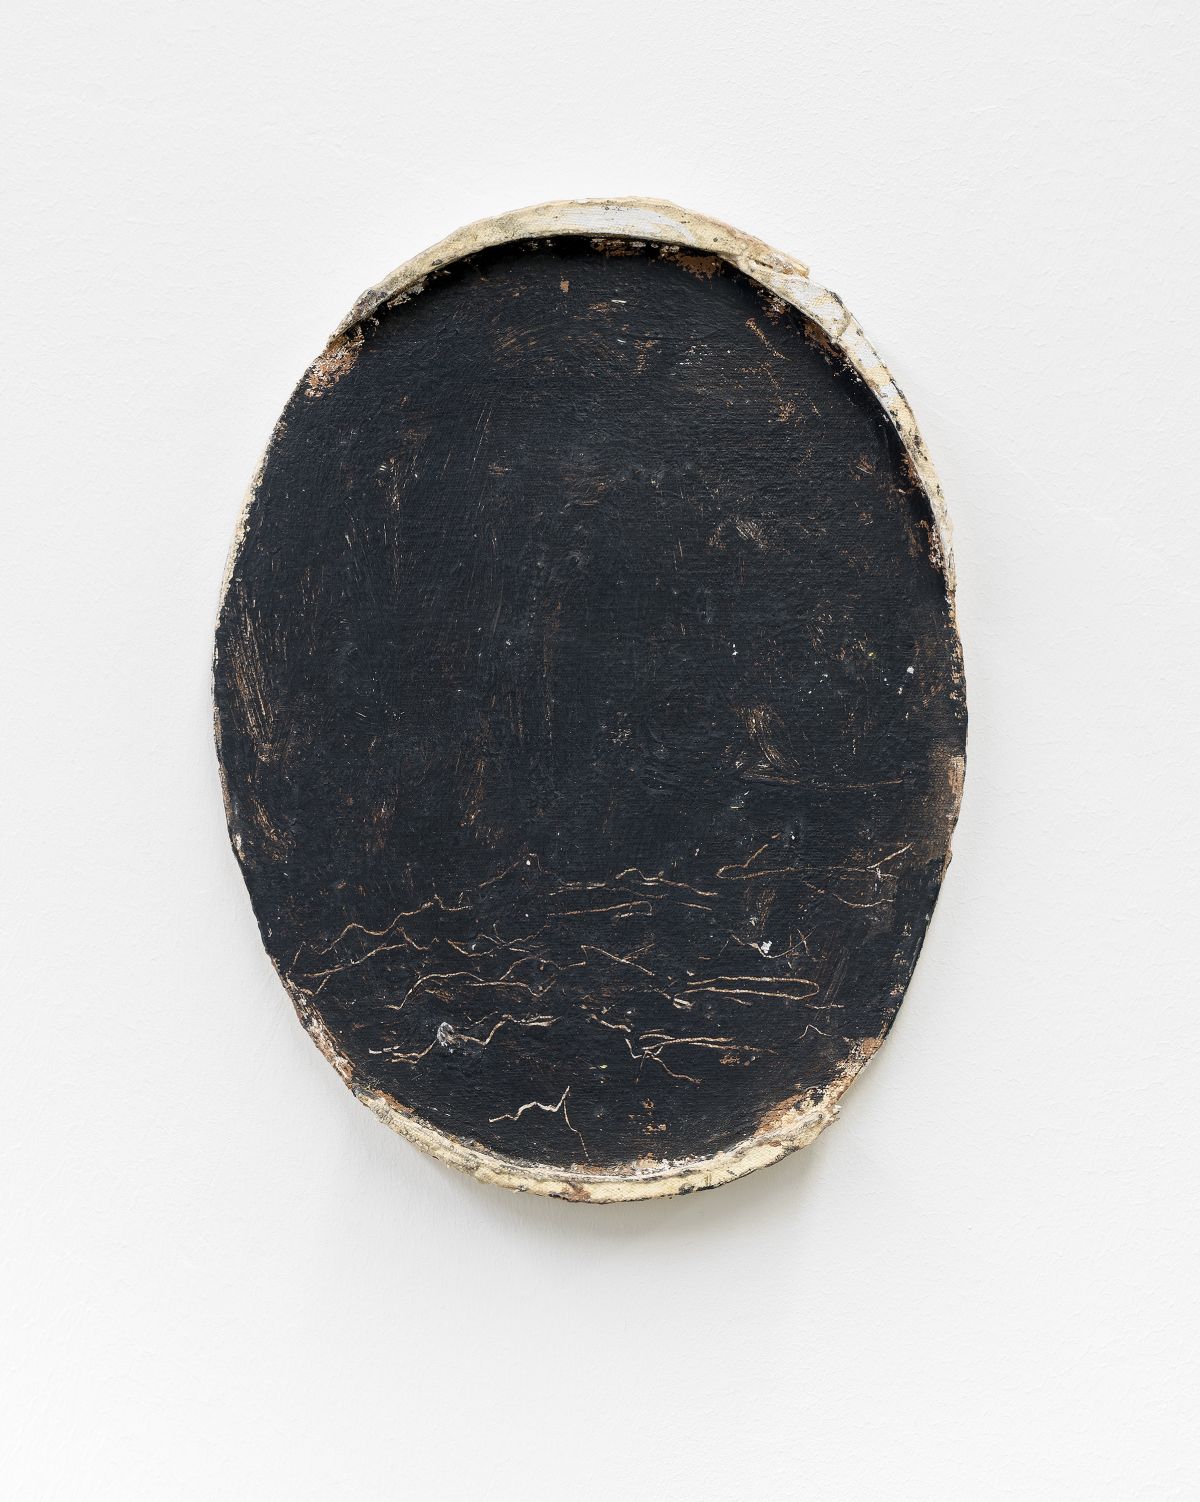 Lawrence Carroll, ‘Untitled (black mirror painting)’, 2015, Wandfarbe, Leinwand, Sperrholz auf Holz